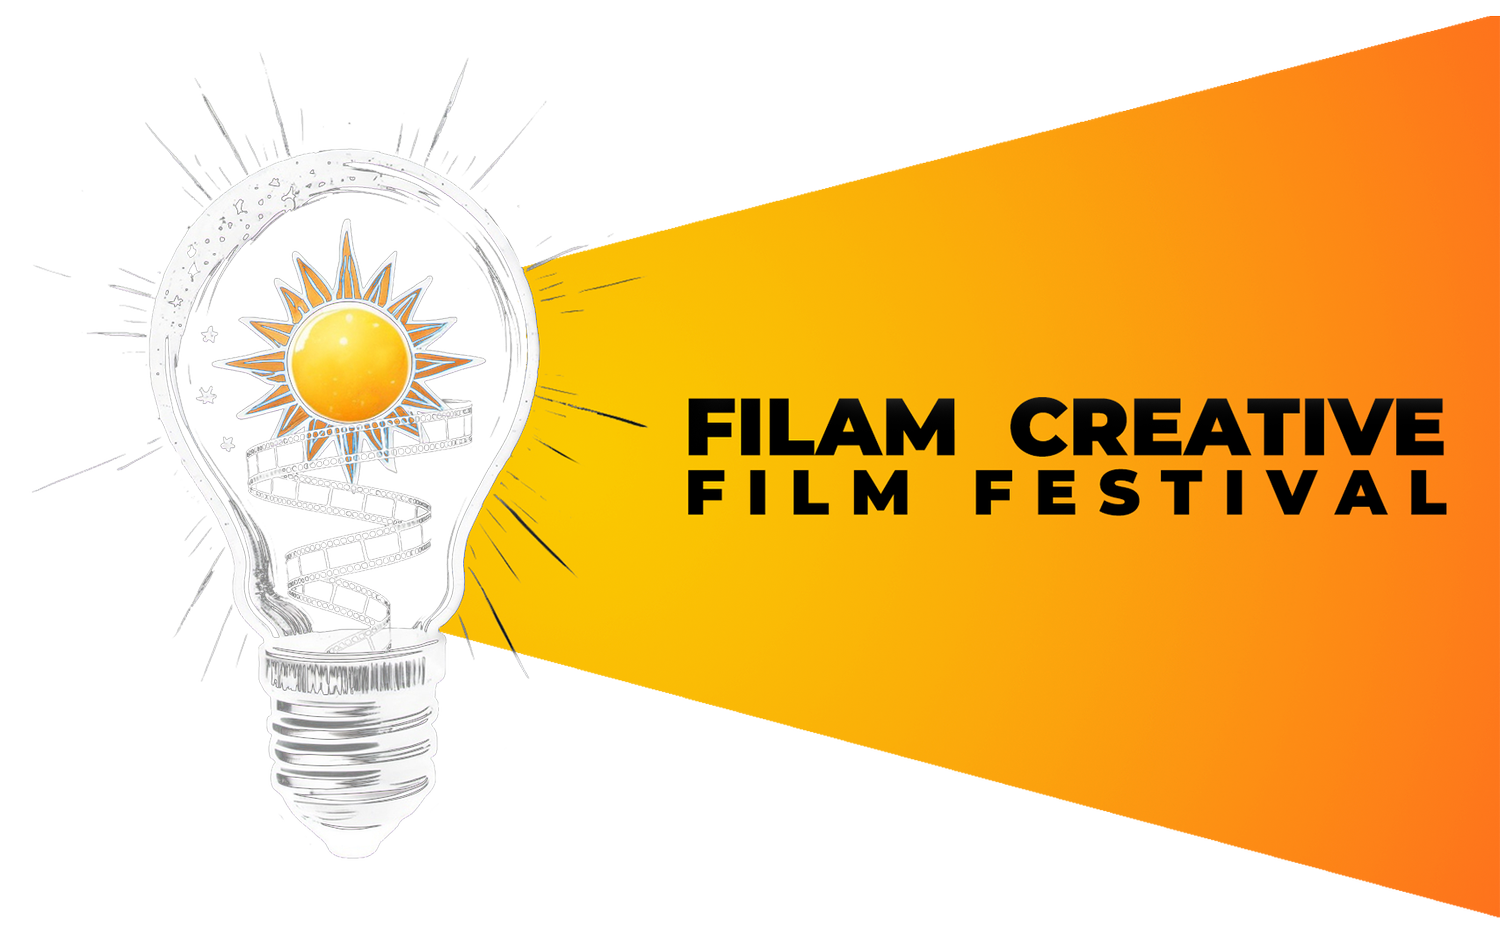 FilAm Creative Film Festival